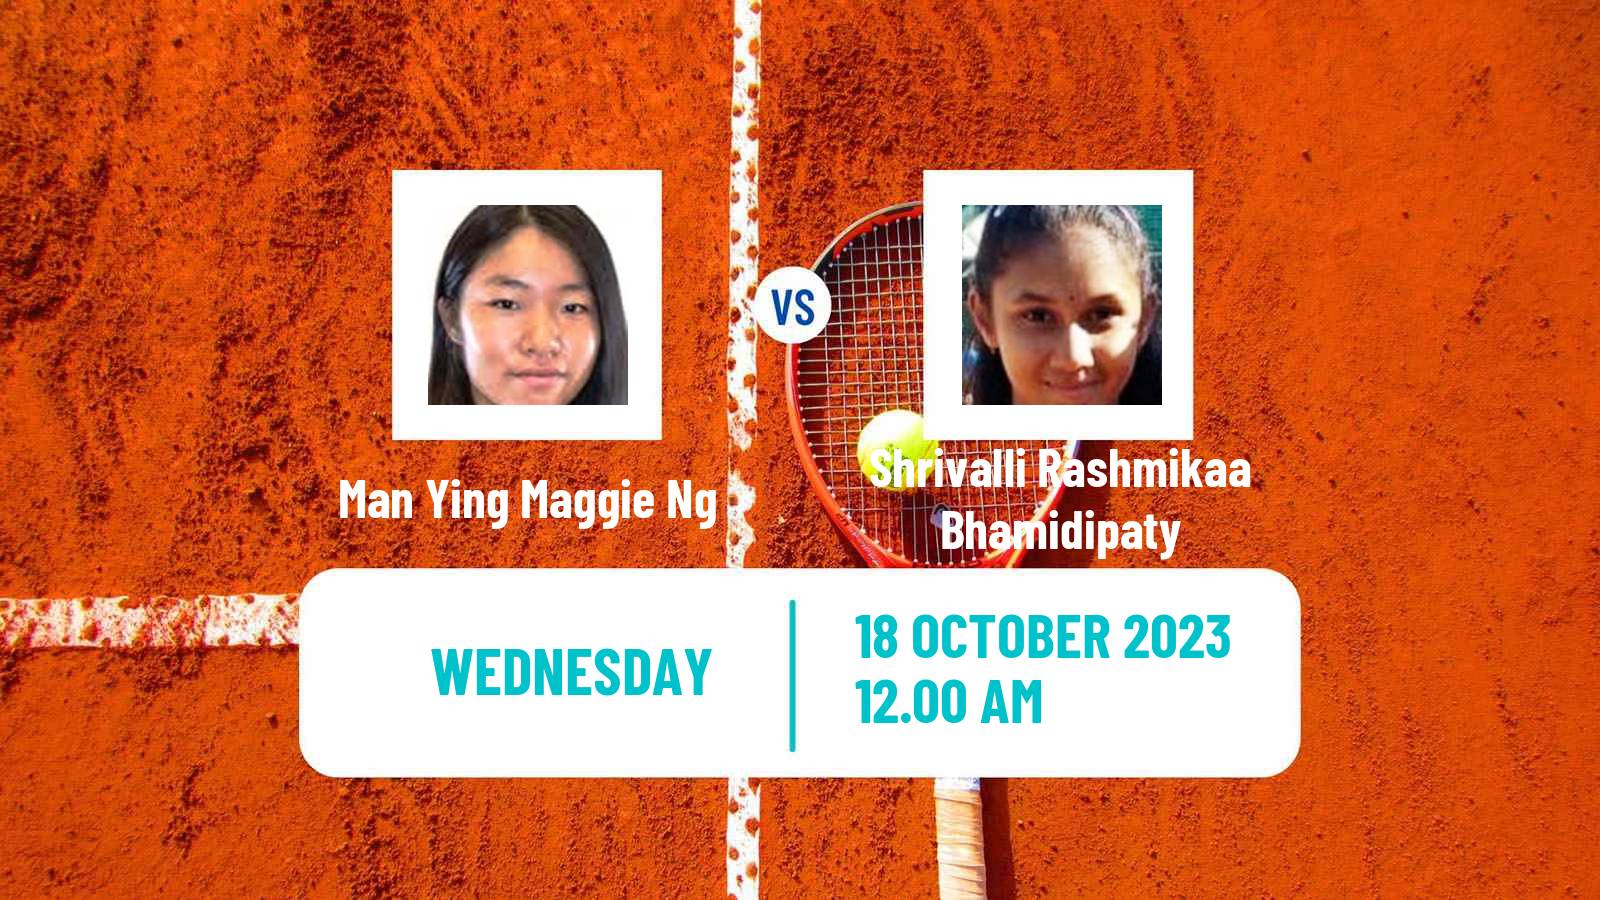 Tennis ITF W15 Hua Hin 2 Women Man Ying Maggie Ng - Shrivalli Rashmikaa Bhamidipaty